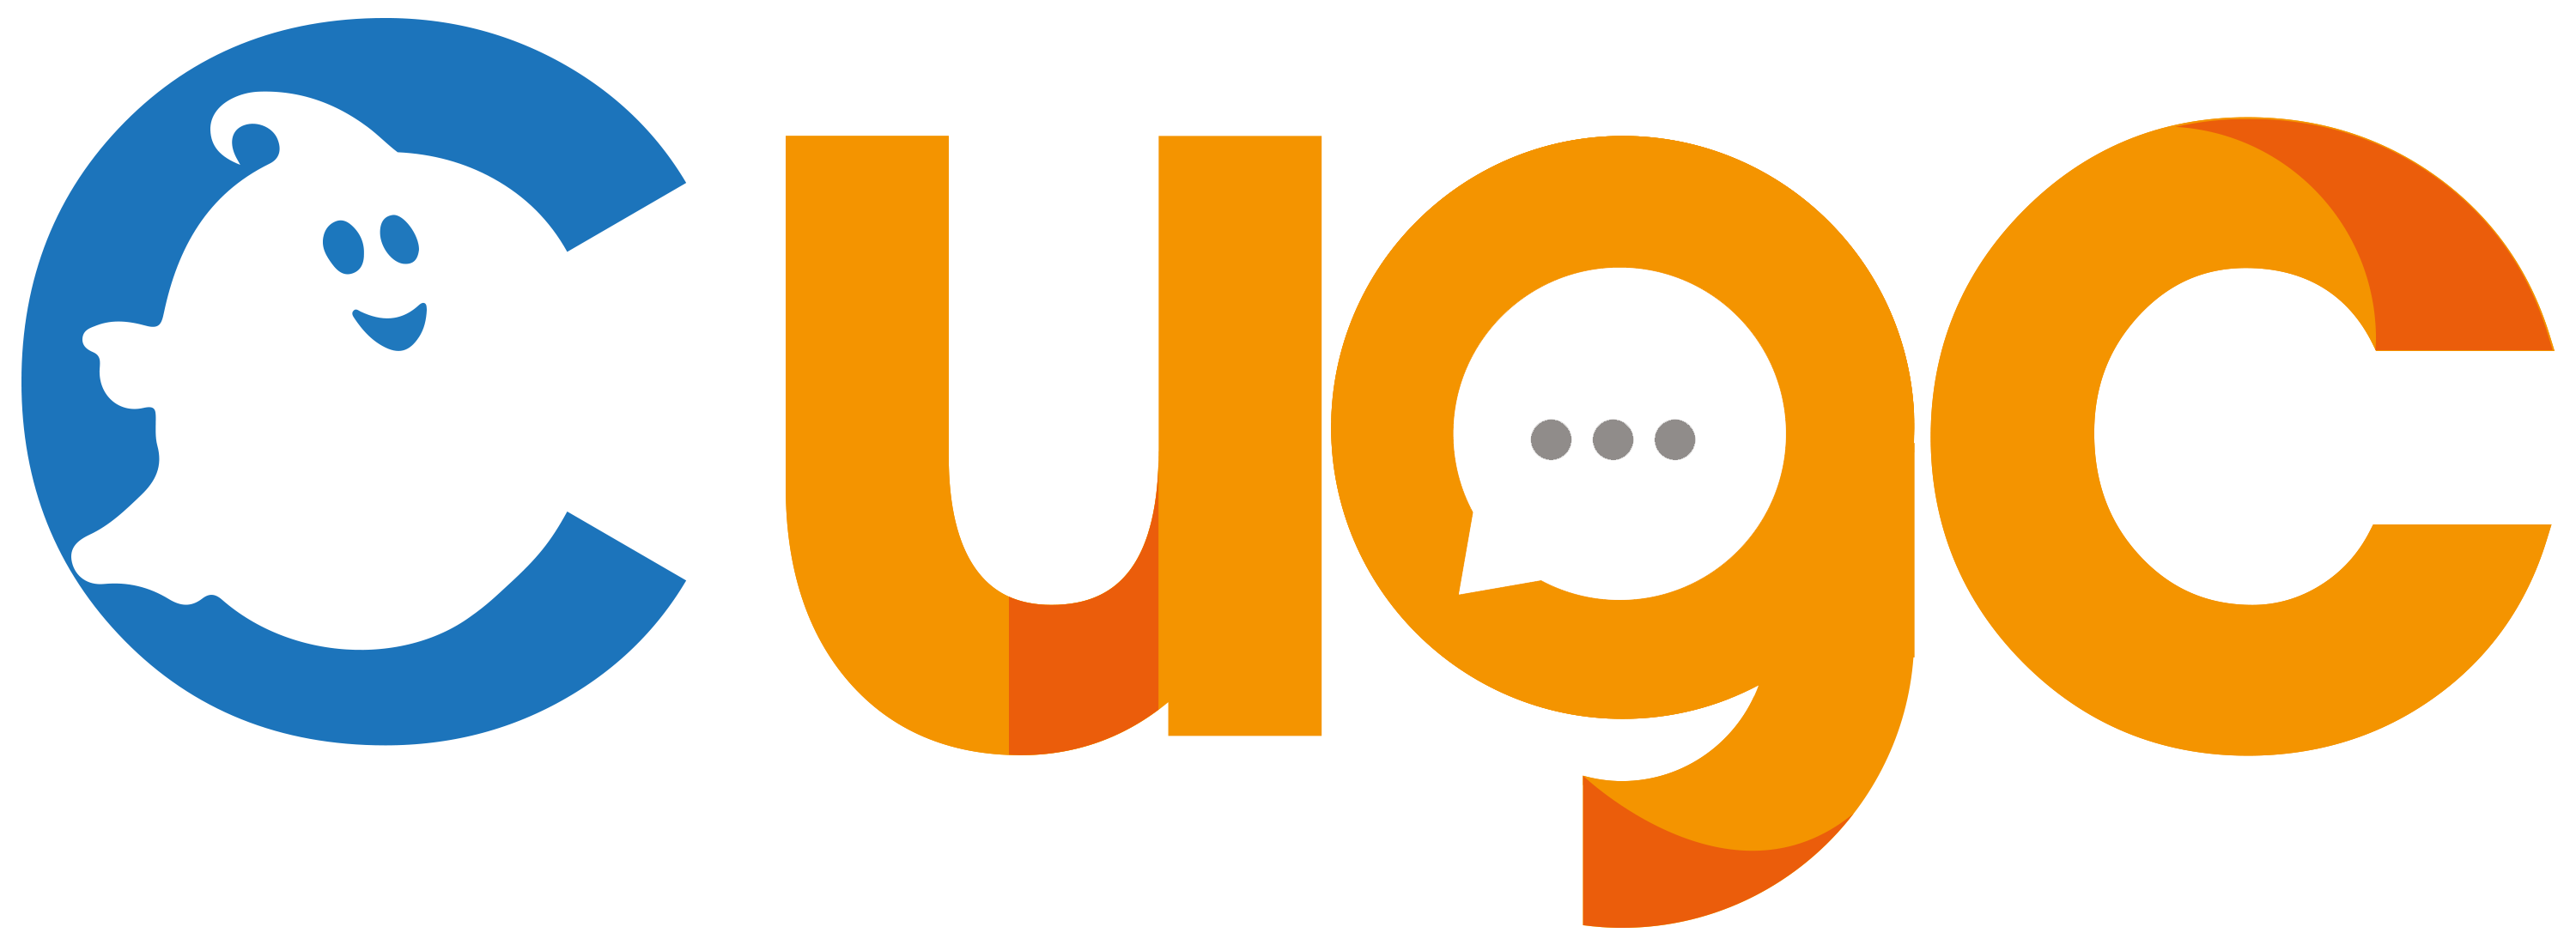 CasperUGC_Logo.png